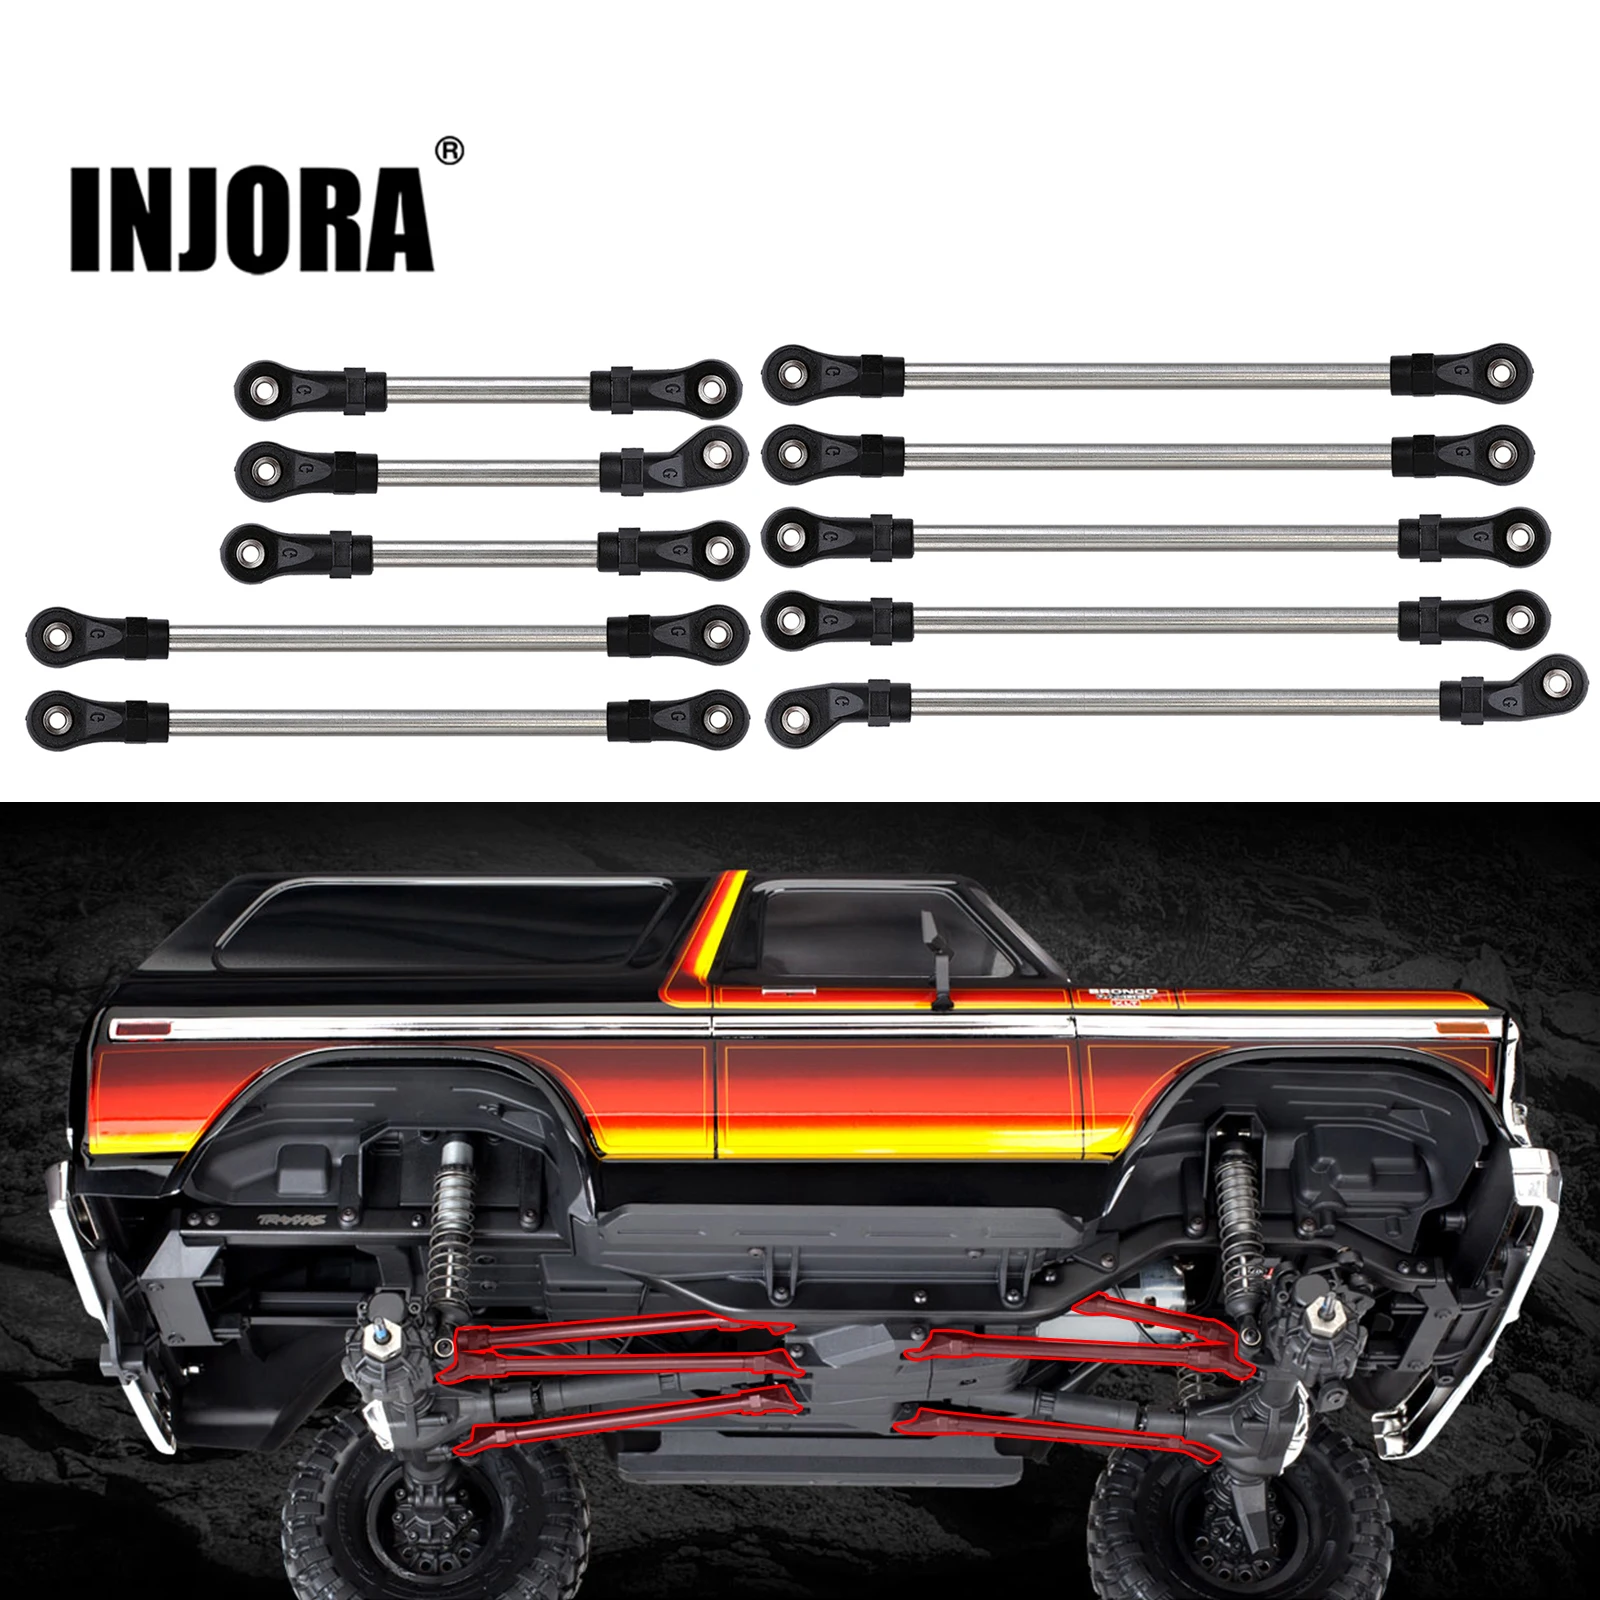 

INJORA 313MM 324mm Wheelbase Stainless Steel Links Plastic Rod End Unassembled Kit for 1/10 RC Crawler Car TRX4 TRX6